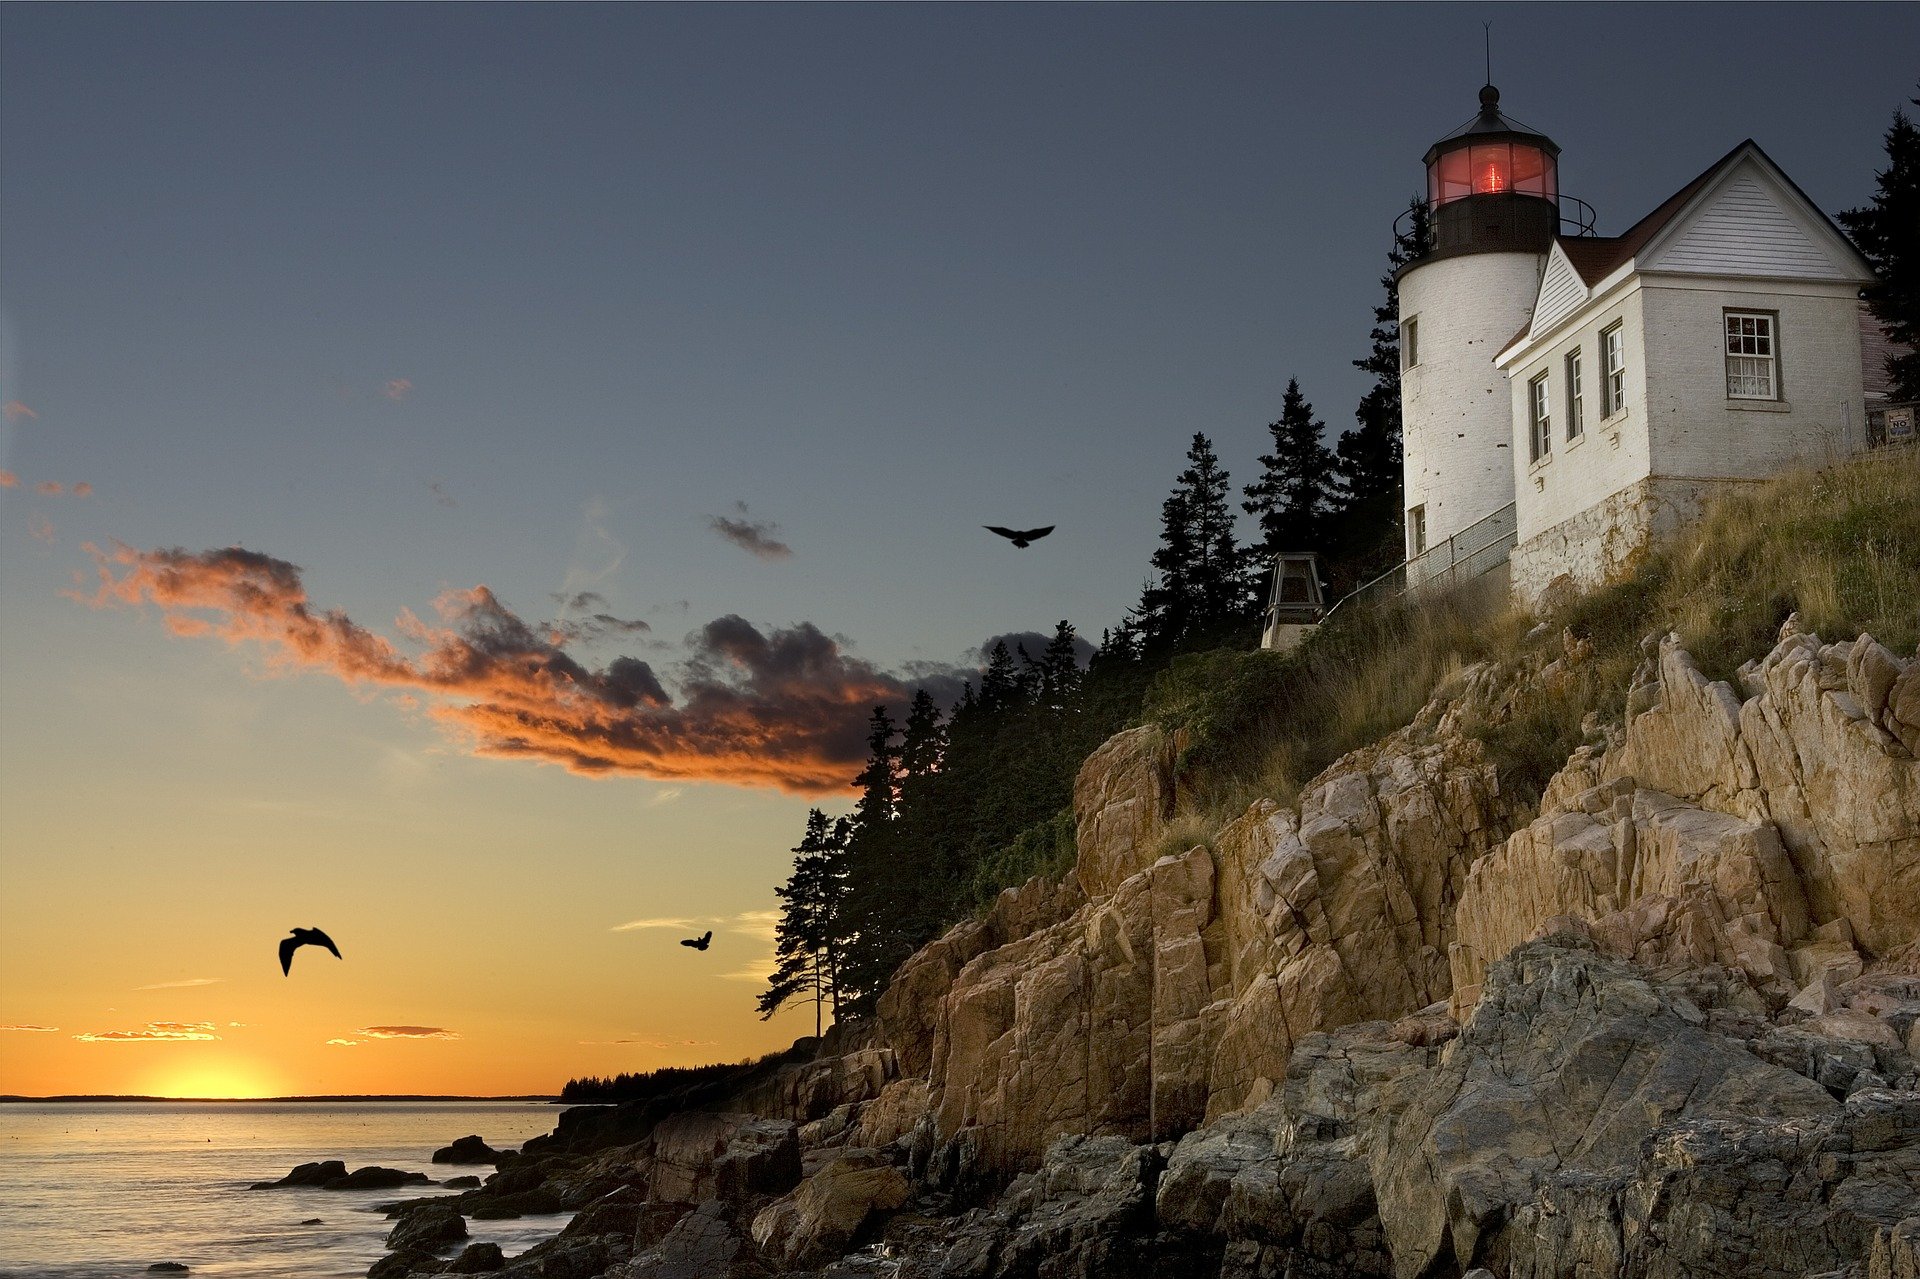 Lighthouse in Maine - VeteranCarDonations.org